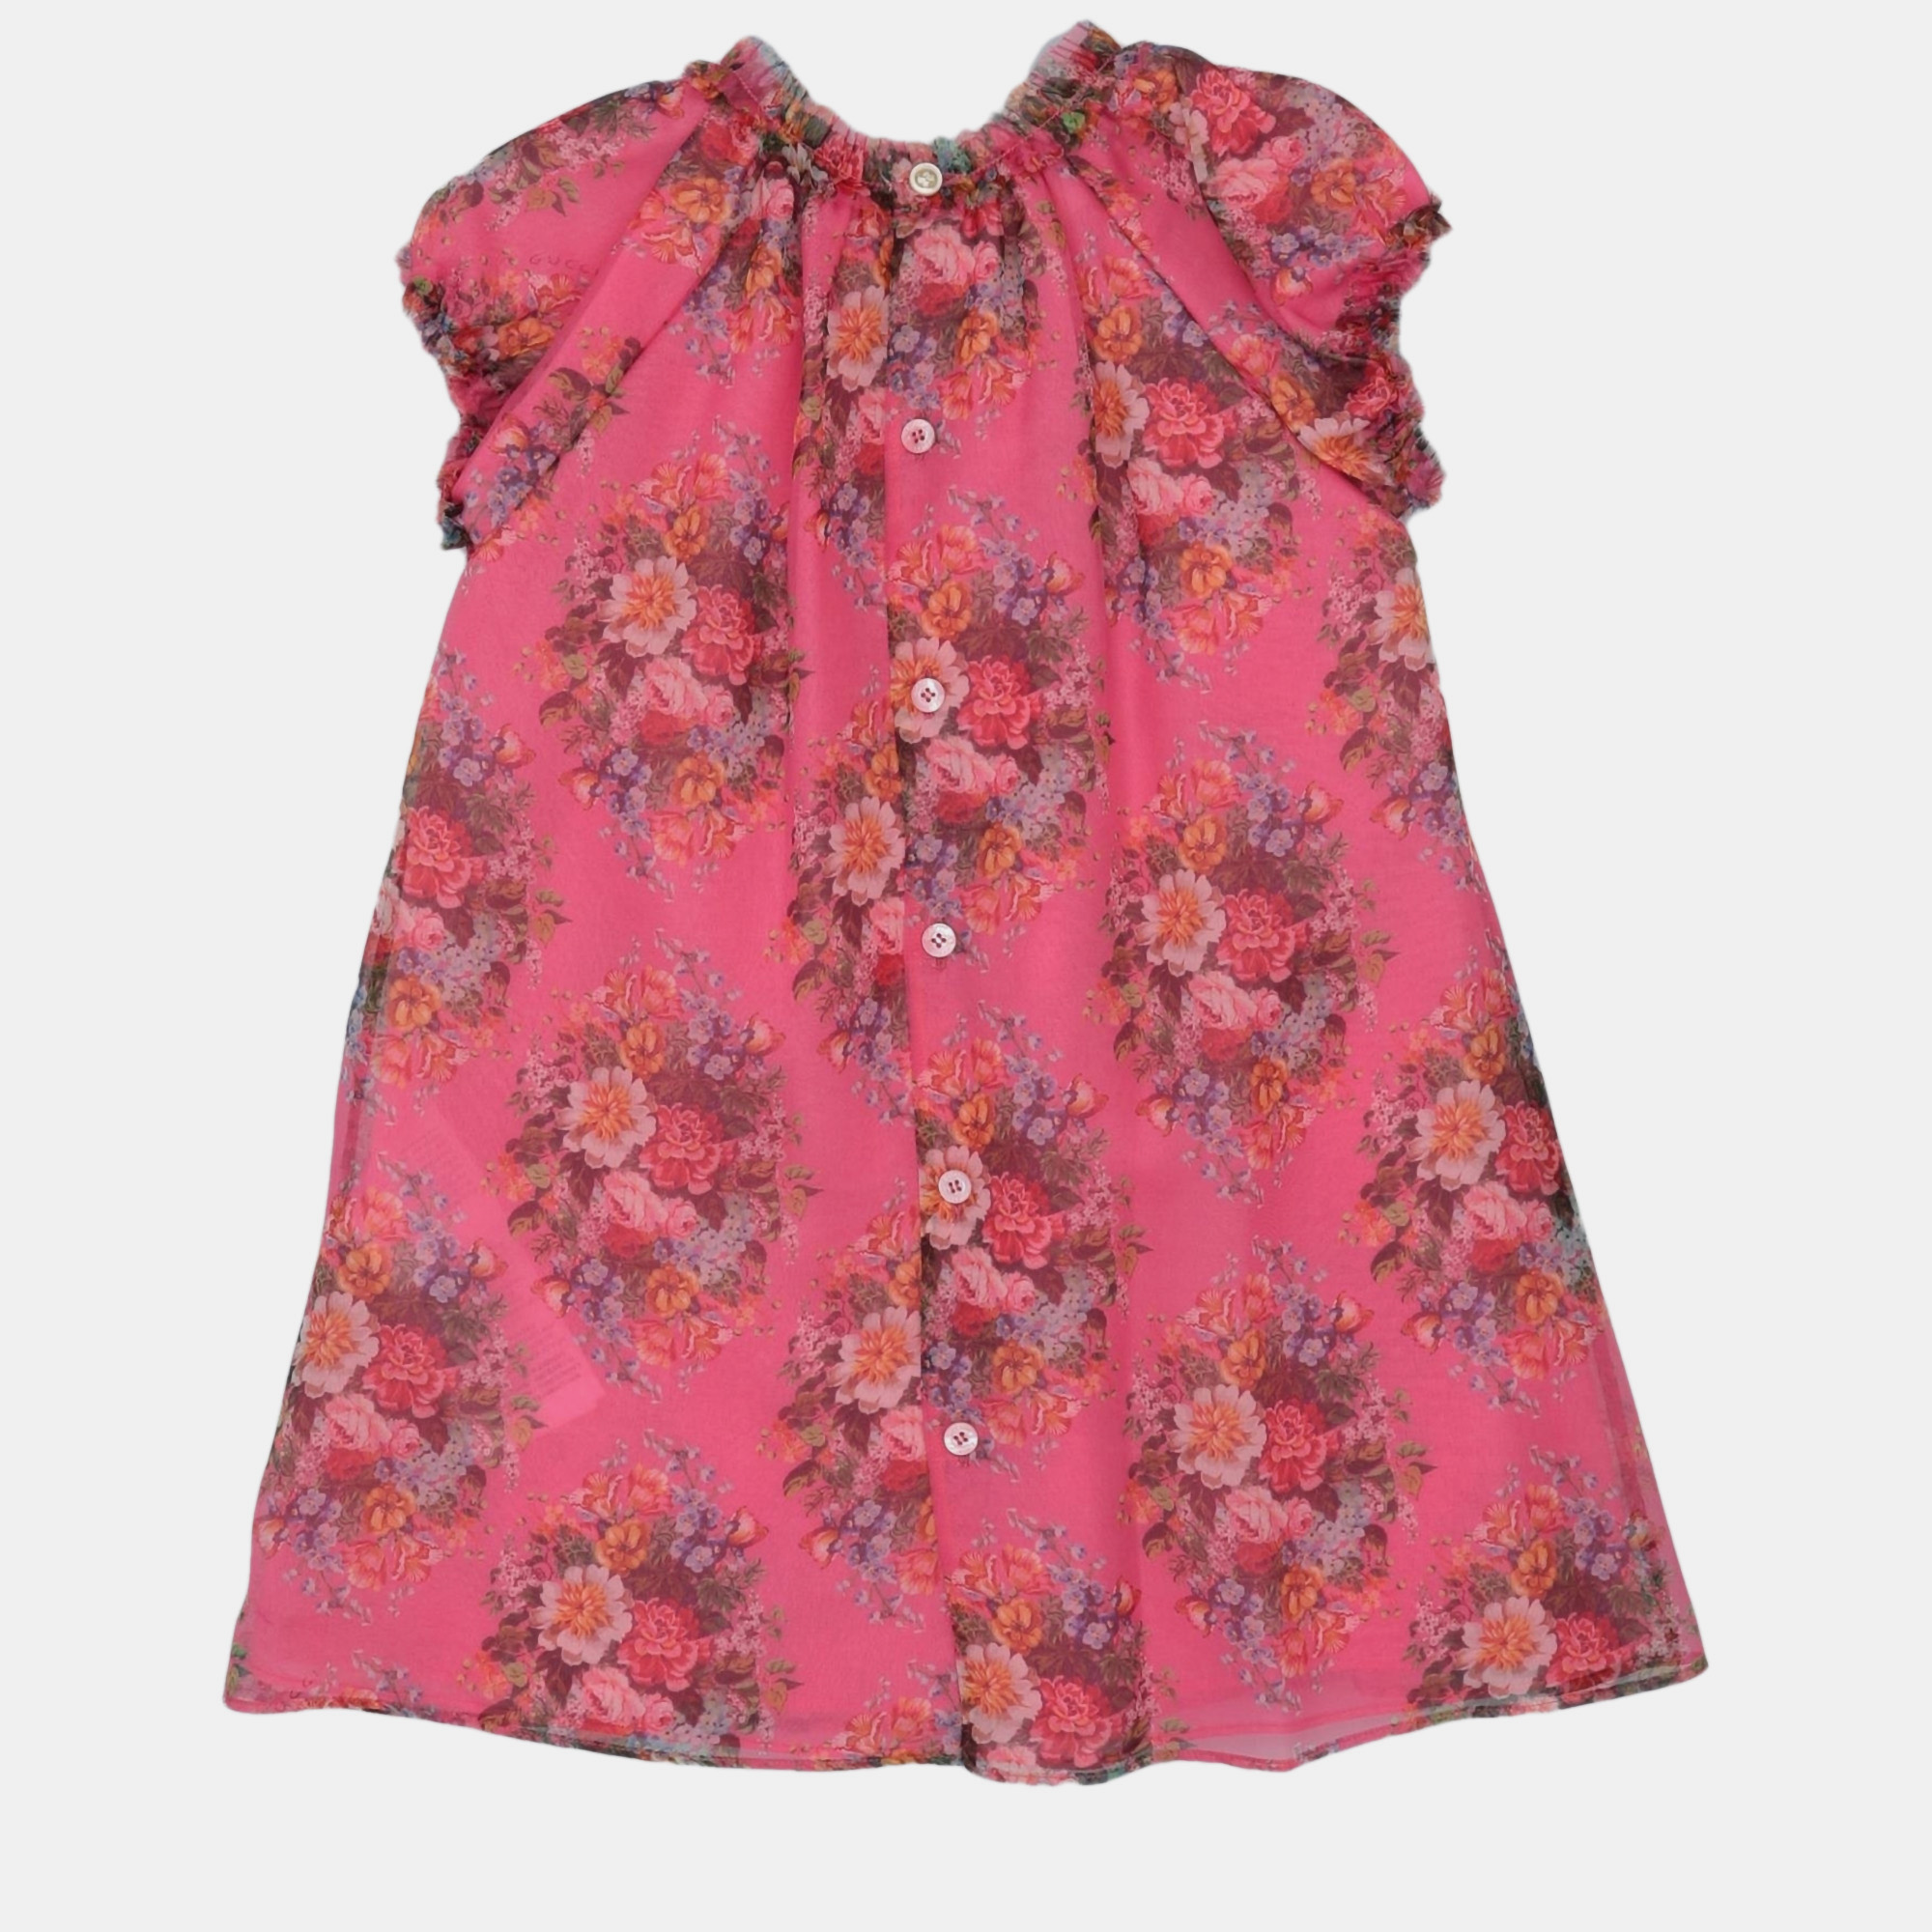 Gucci pink floral print silk dress size 3y